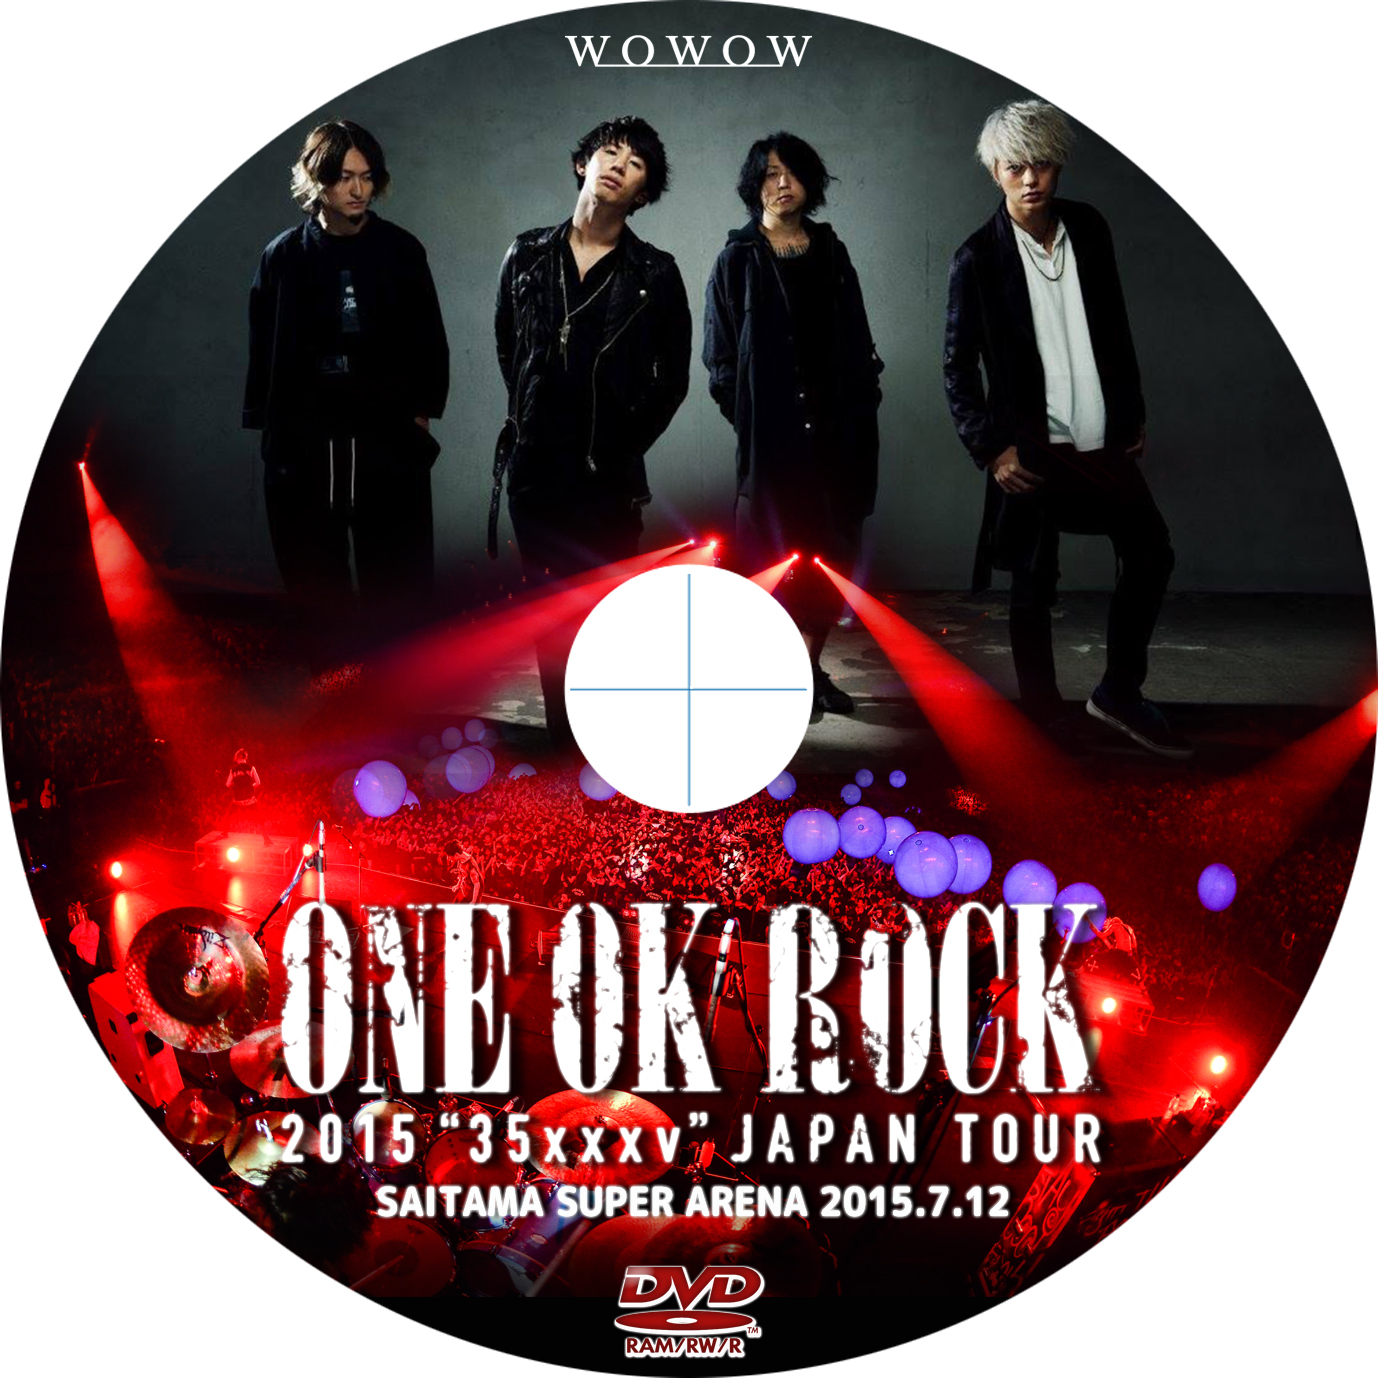 ONE OK ROCK 2015 “35xxxv” JAPAN TOUR - 音楽ライブ（わ行）